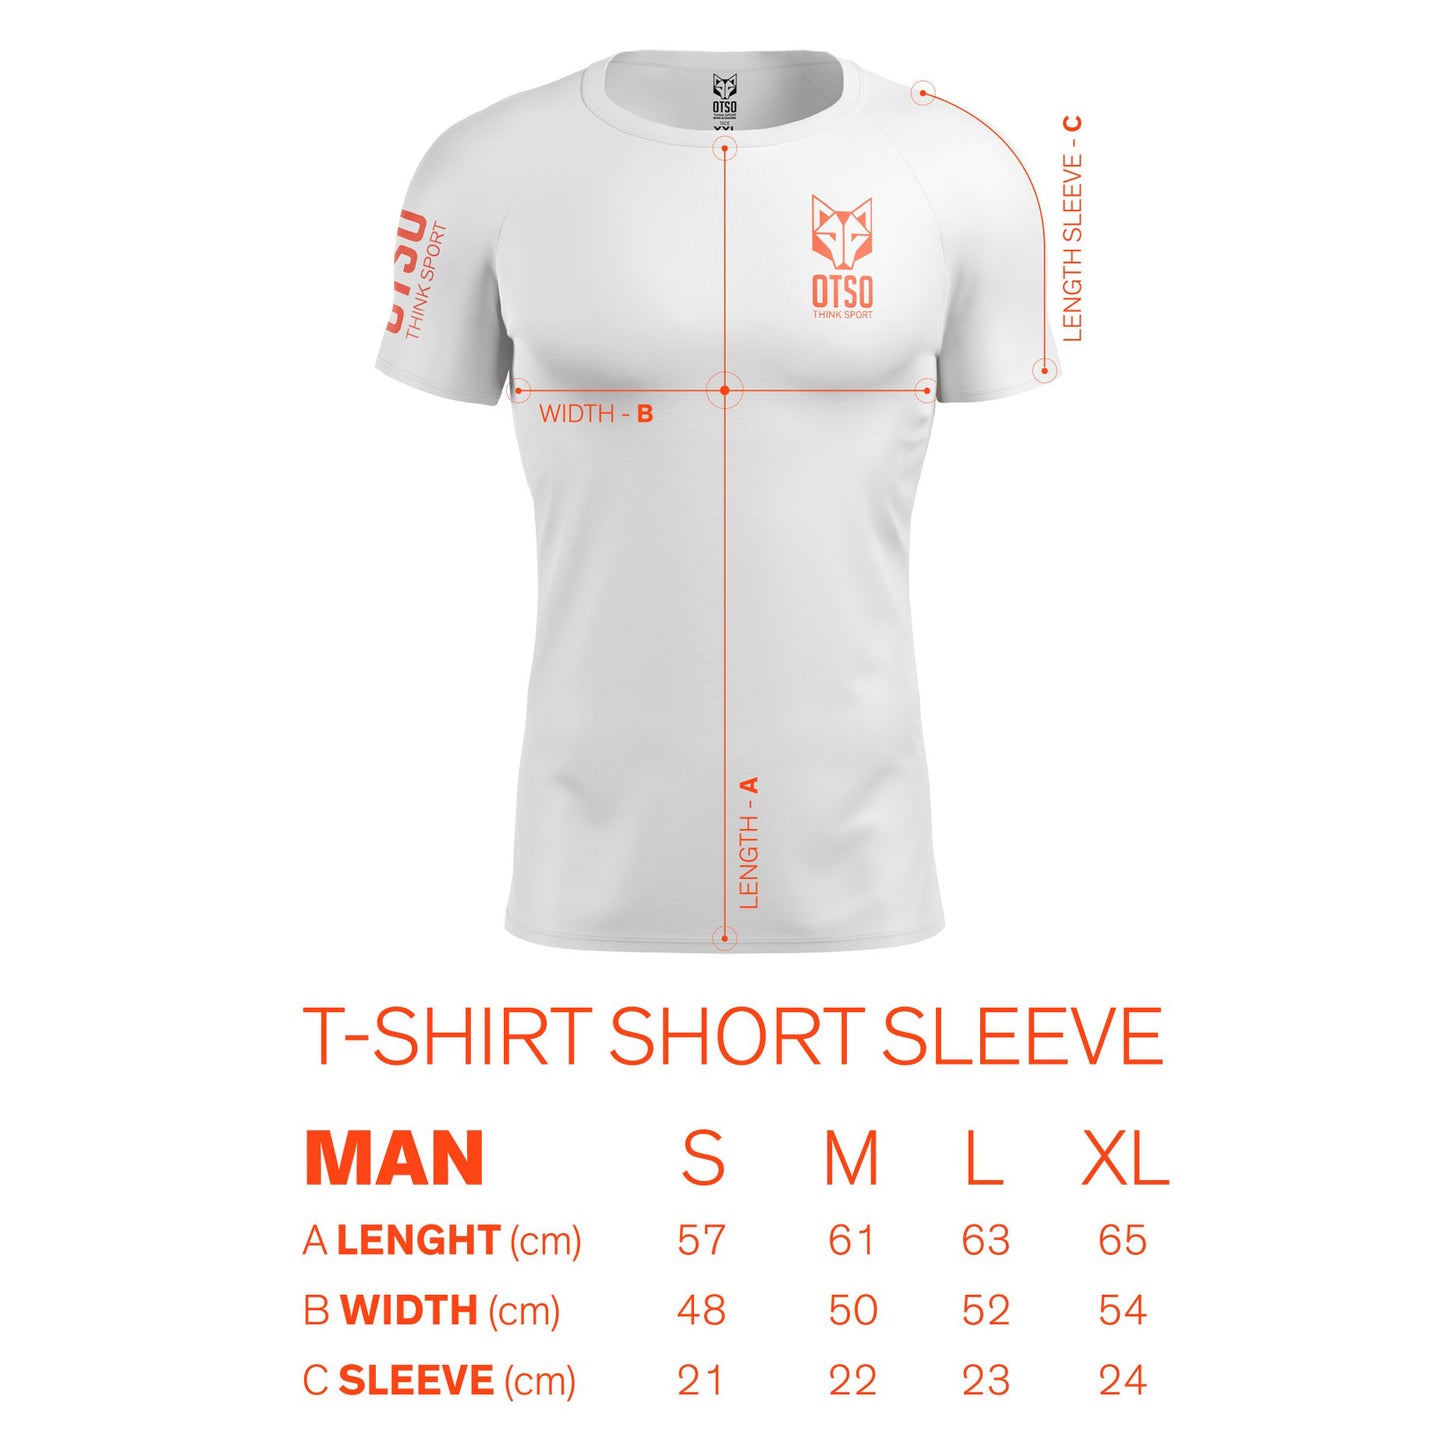 Men's Short Sleeve T-shirt - Popeye & Olive